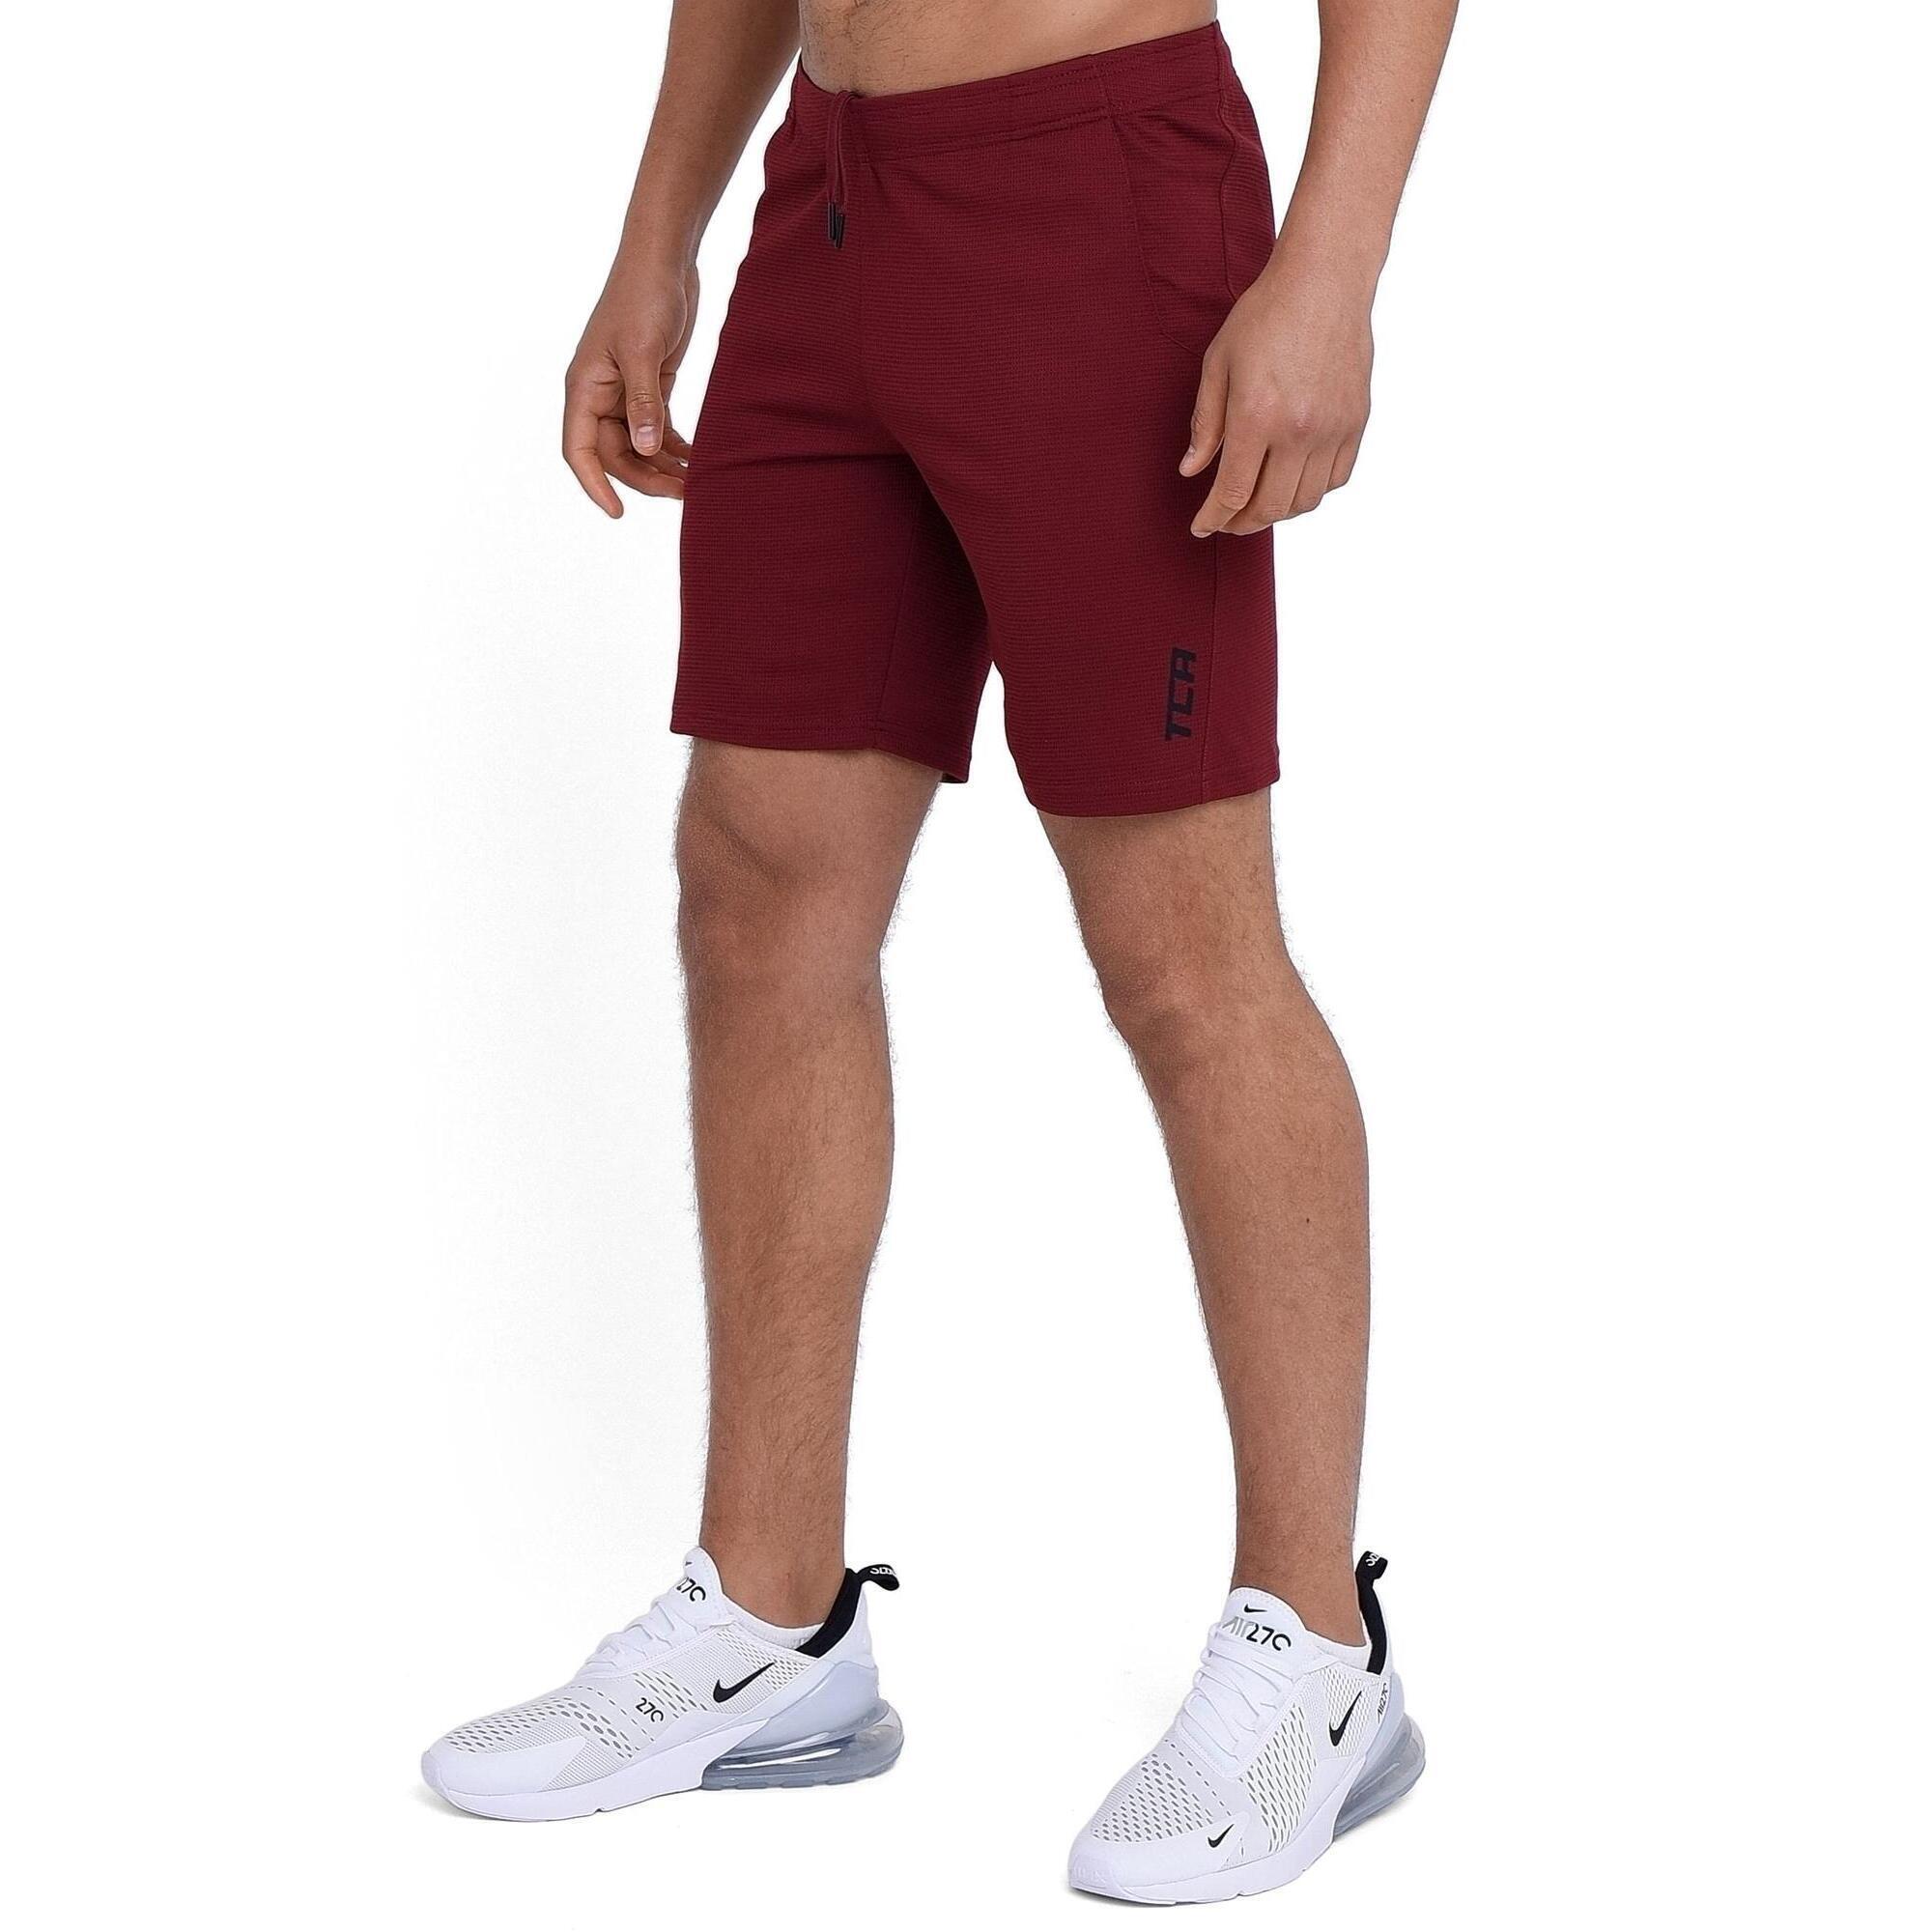 TCA Men's Aeron Running Shorts with Pockets - Cabernet